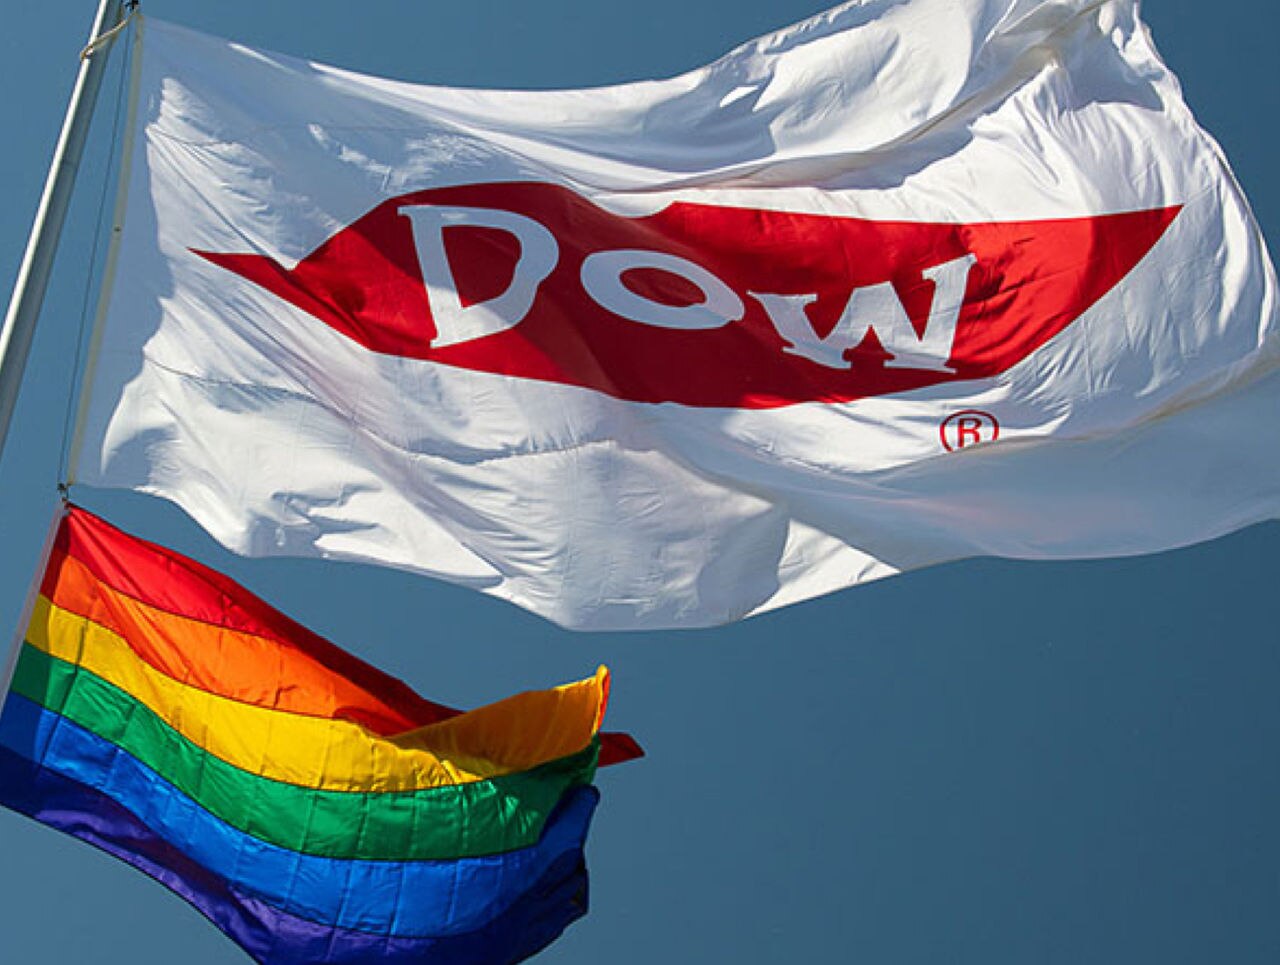 Dow flag flying alongside Pride flag